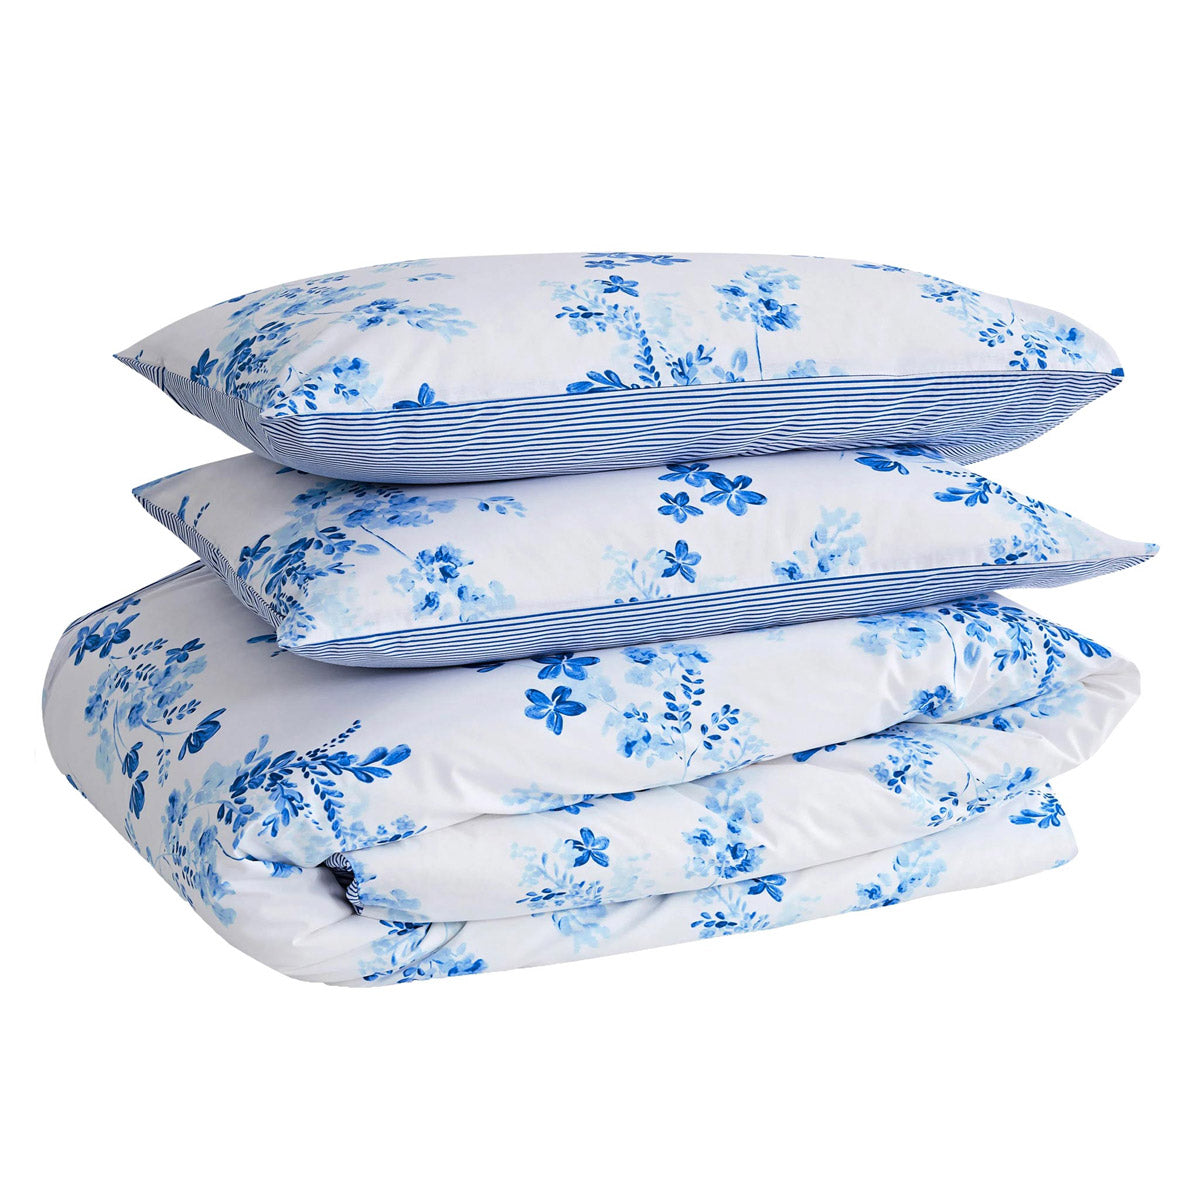 One Pair Sevilla Blue Floral 100% Cotton Standard Pillowcase Pair